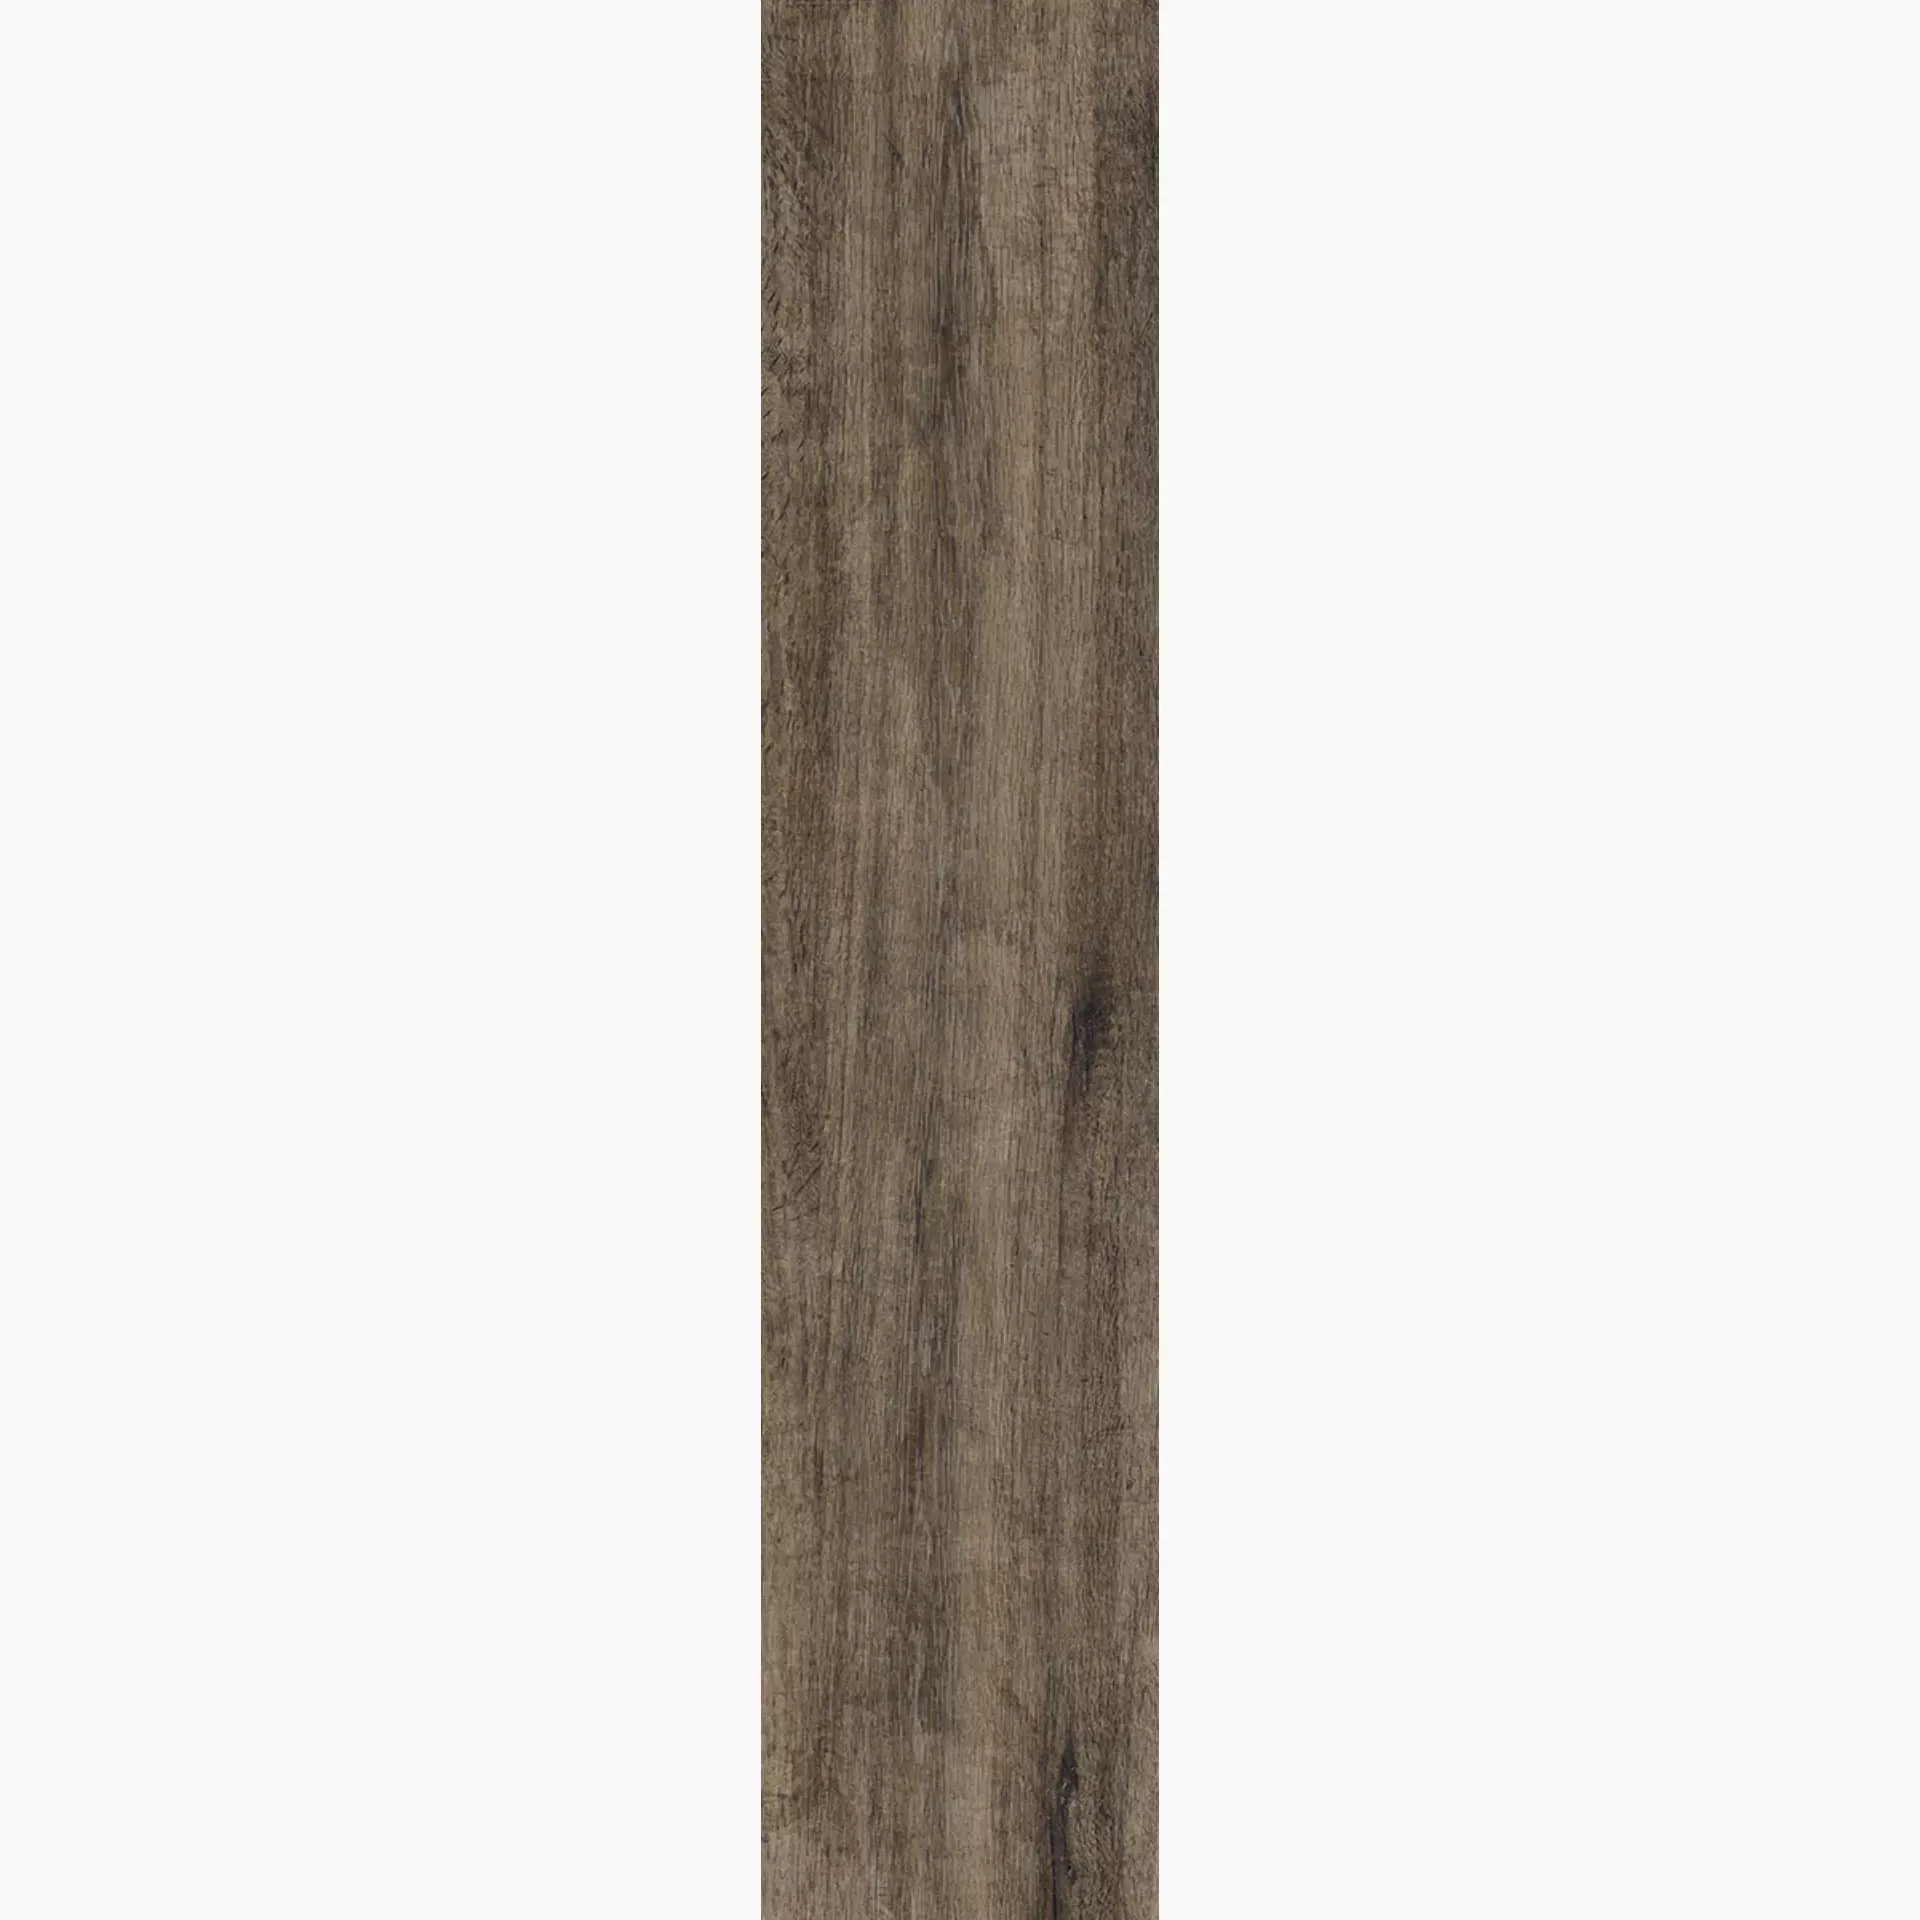 Rondine Greenwood Greige Naturale J86328 24x120cm 8,5mm